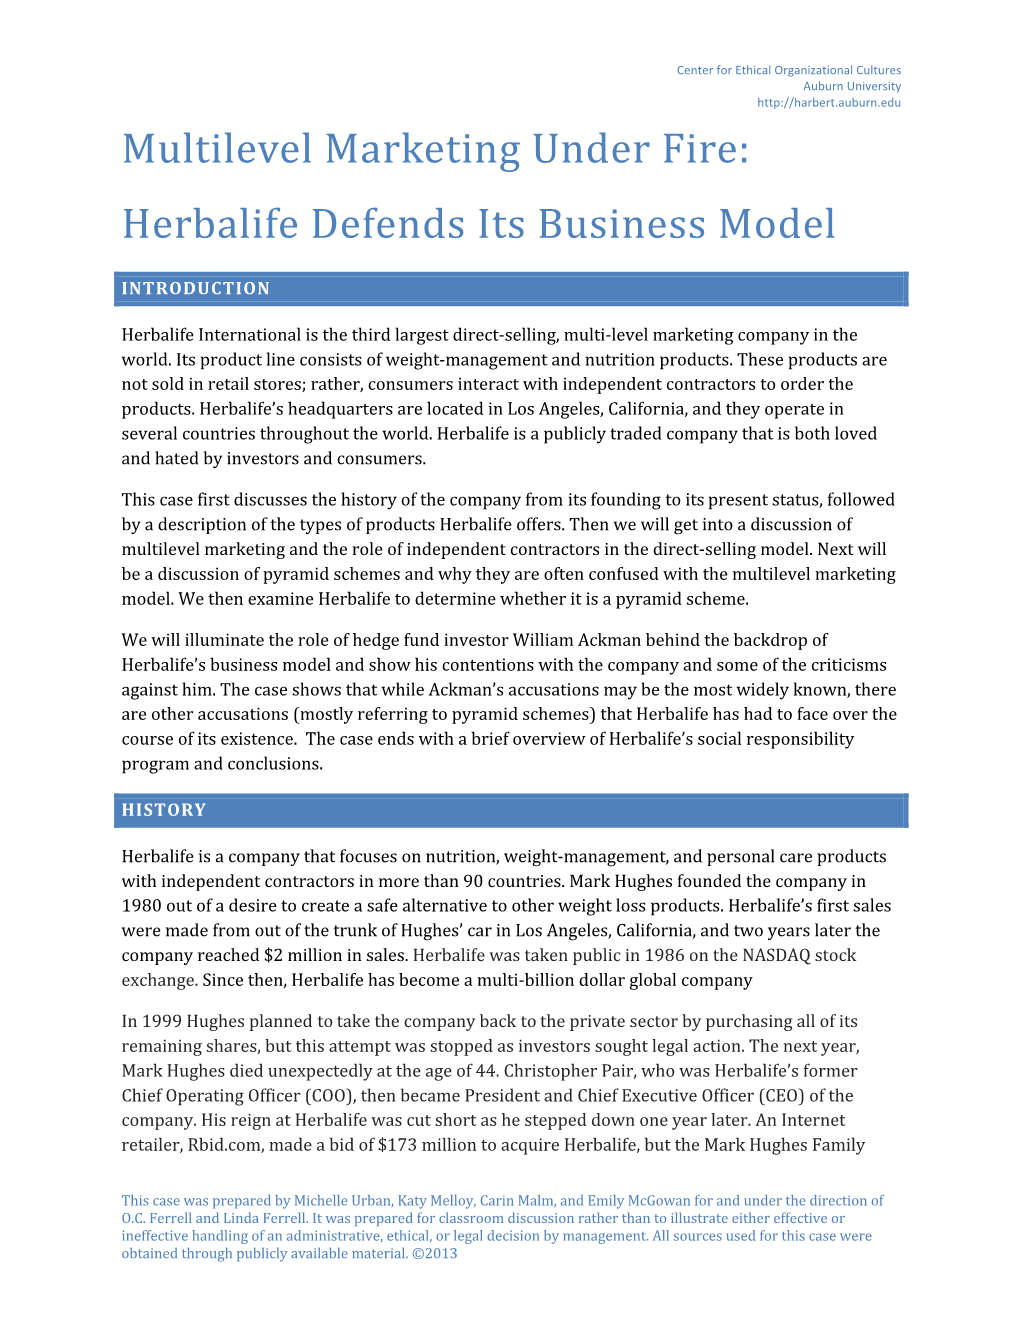 Multilevel Marketing Under Fire: Herbalife Defends Its Business Model